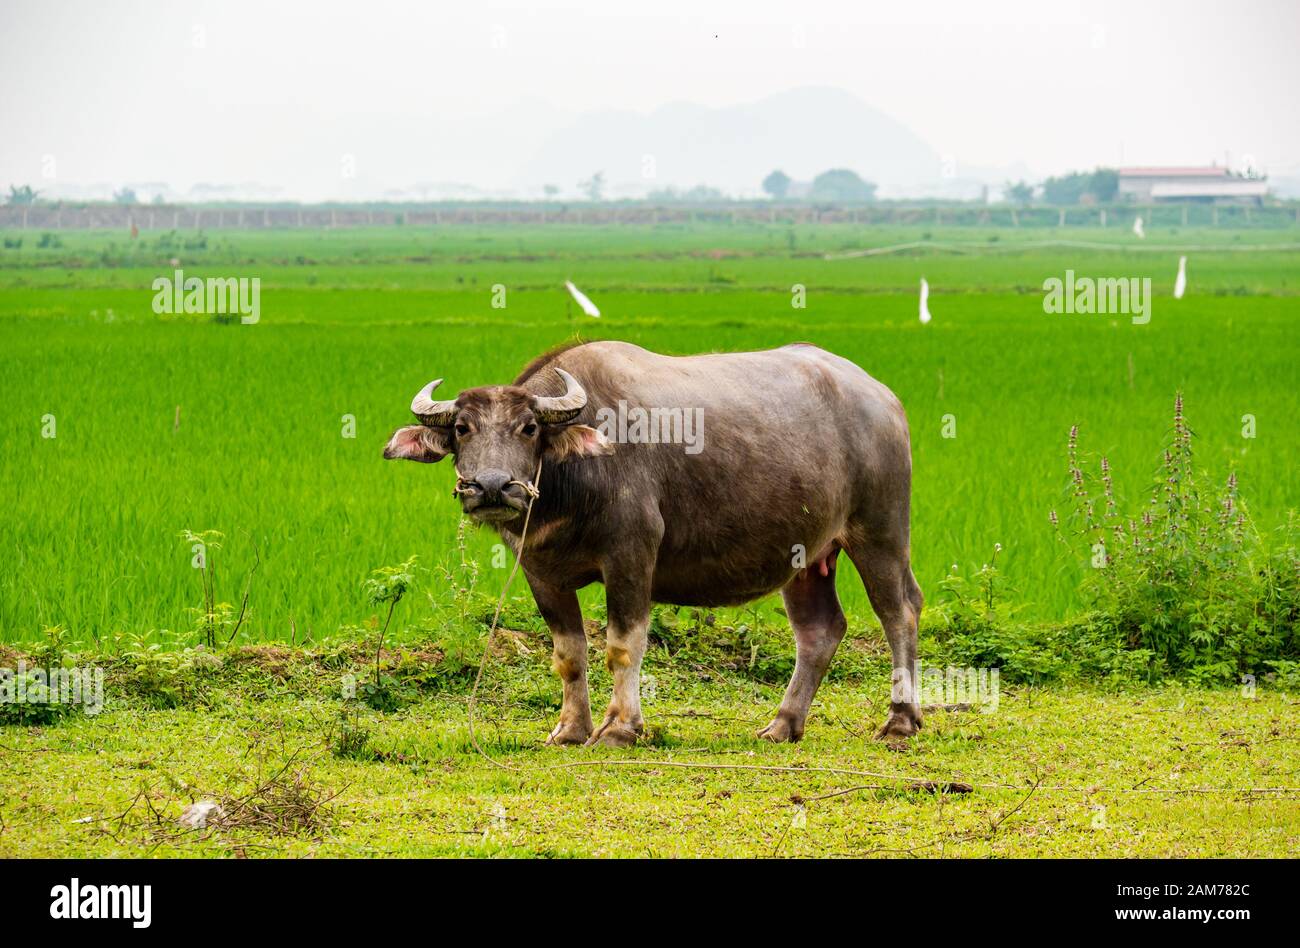 Water buffalo, Bubalus bubalis, tied up in field with rice paddy fields, Dong Tham, Ninh Binh, Vietnam, Asia Stock Photo